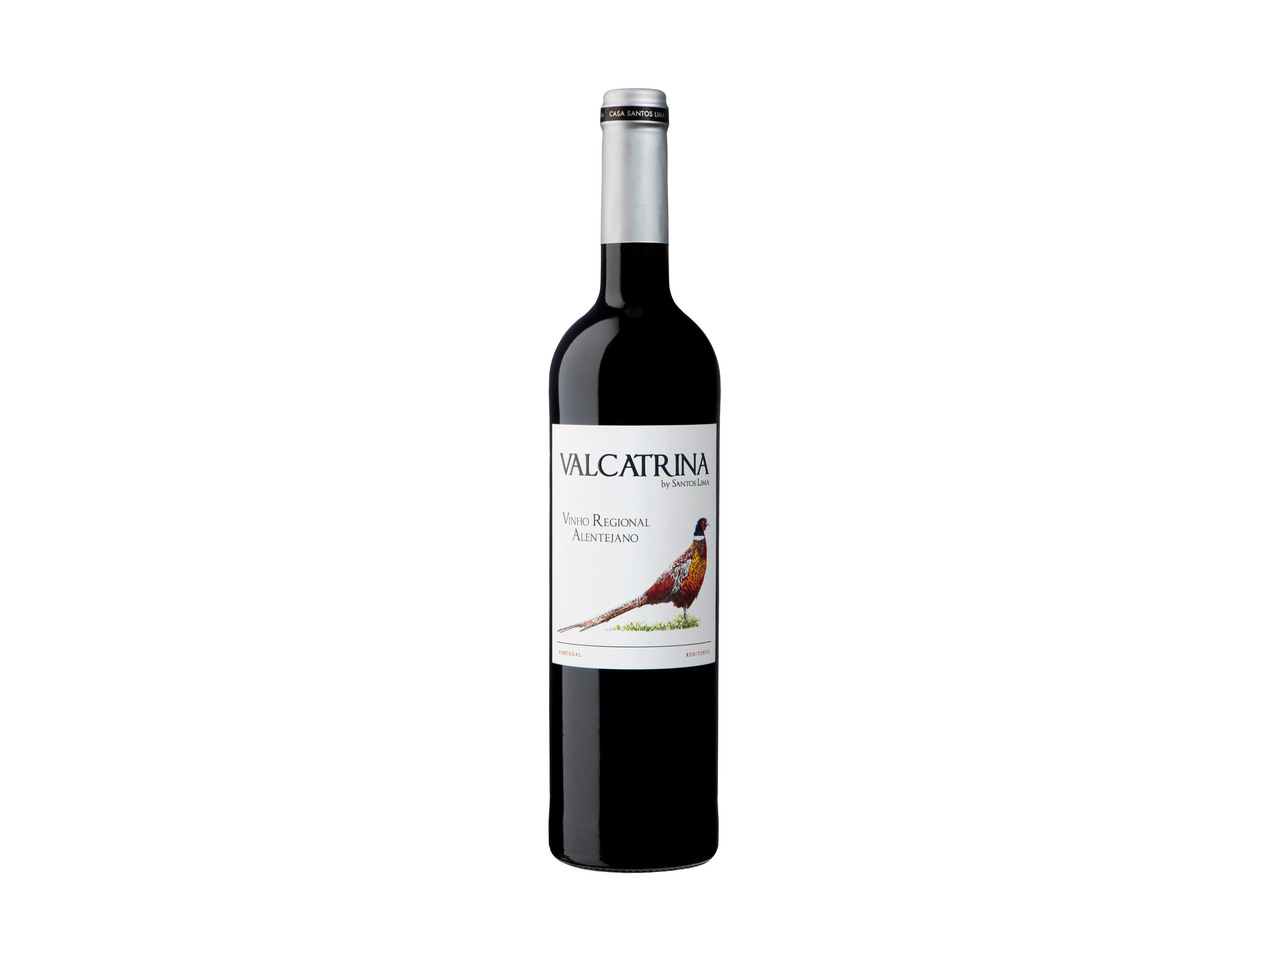 VALCATRINA(R) Vinho Tinto Regional Alentejano